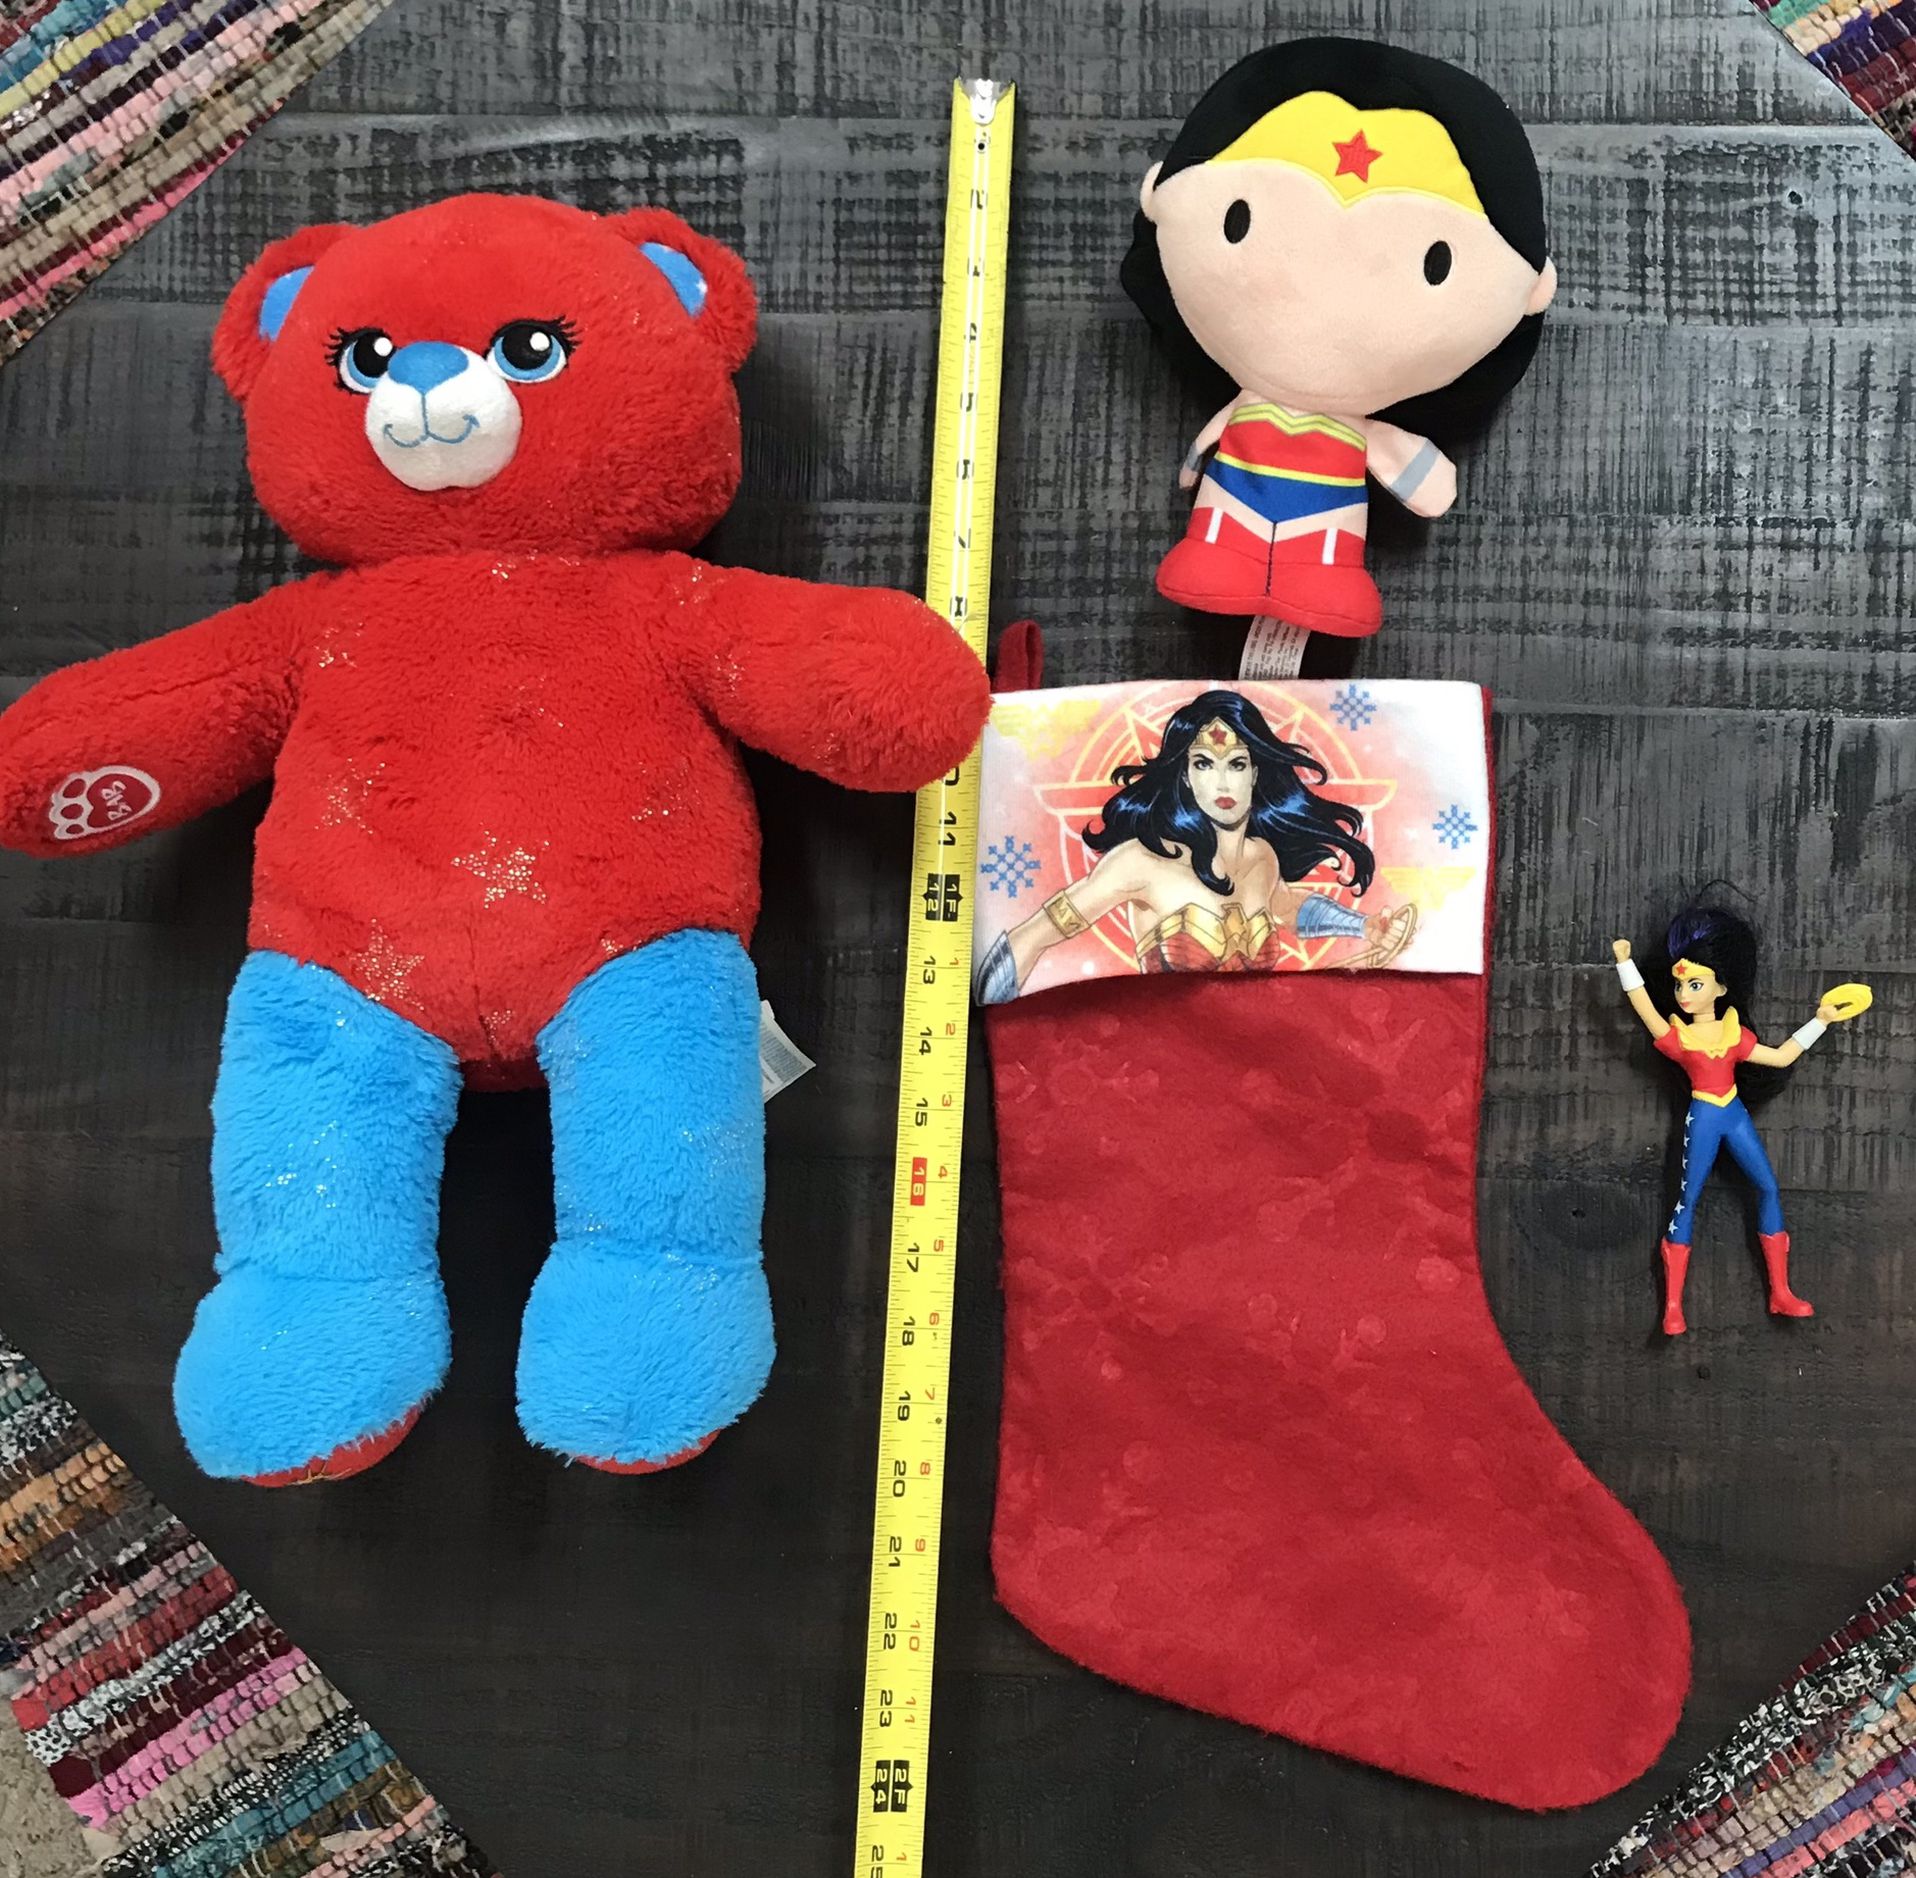 Wonder Woman DC Comics Lot Including a Build a Bear $5 for all